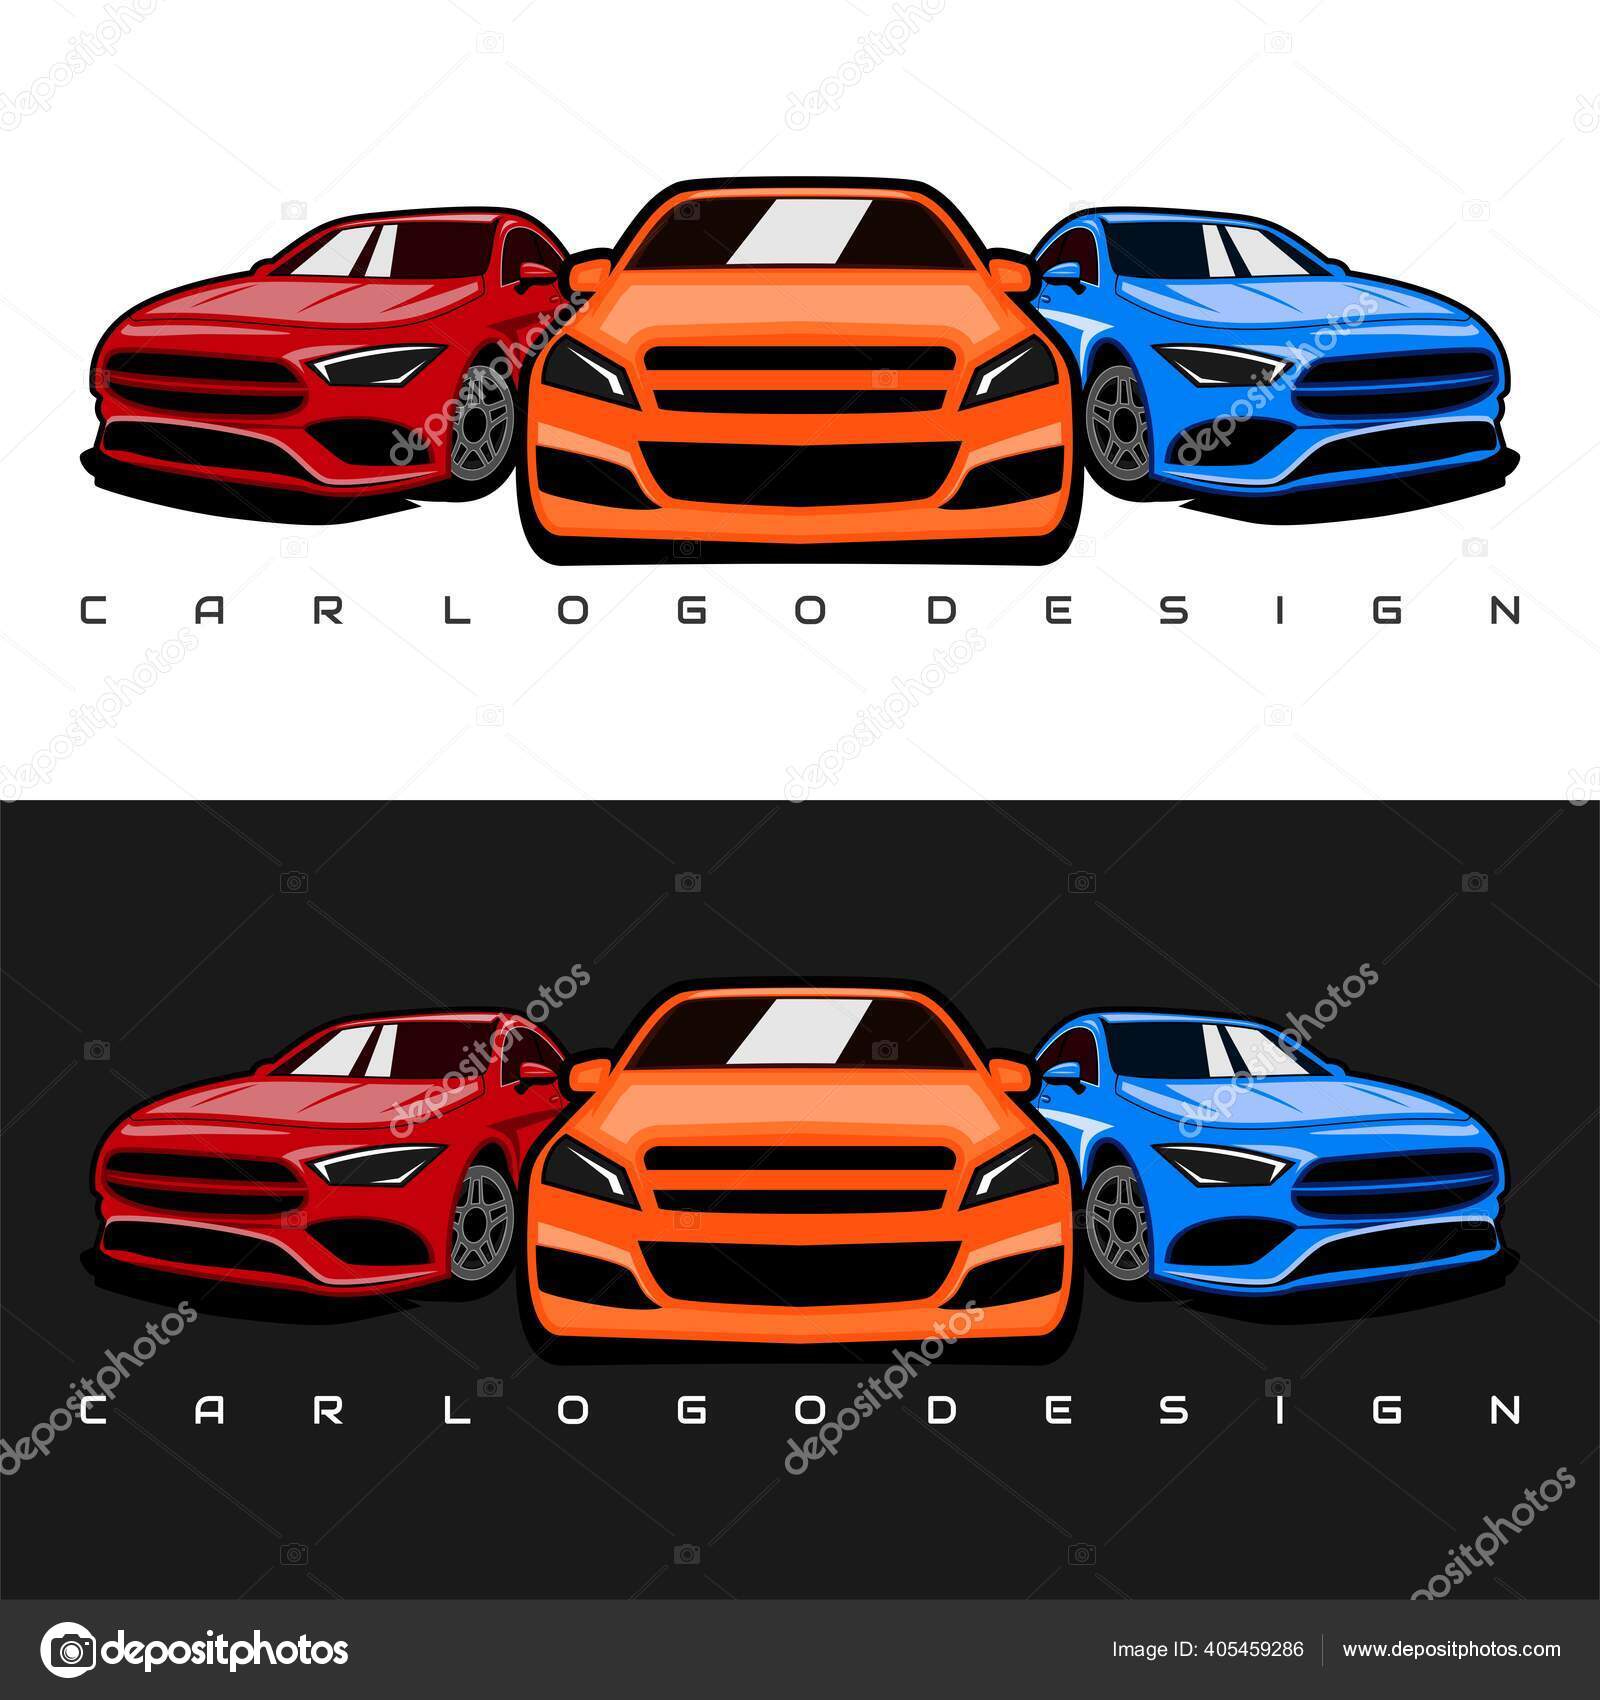 Car icon logo design concept illustration Stock Vector Image & Art - Alamy